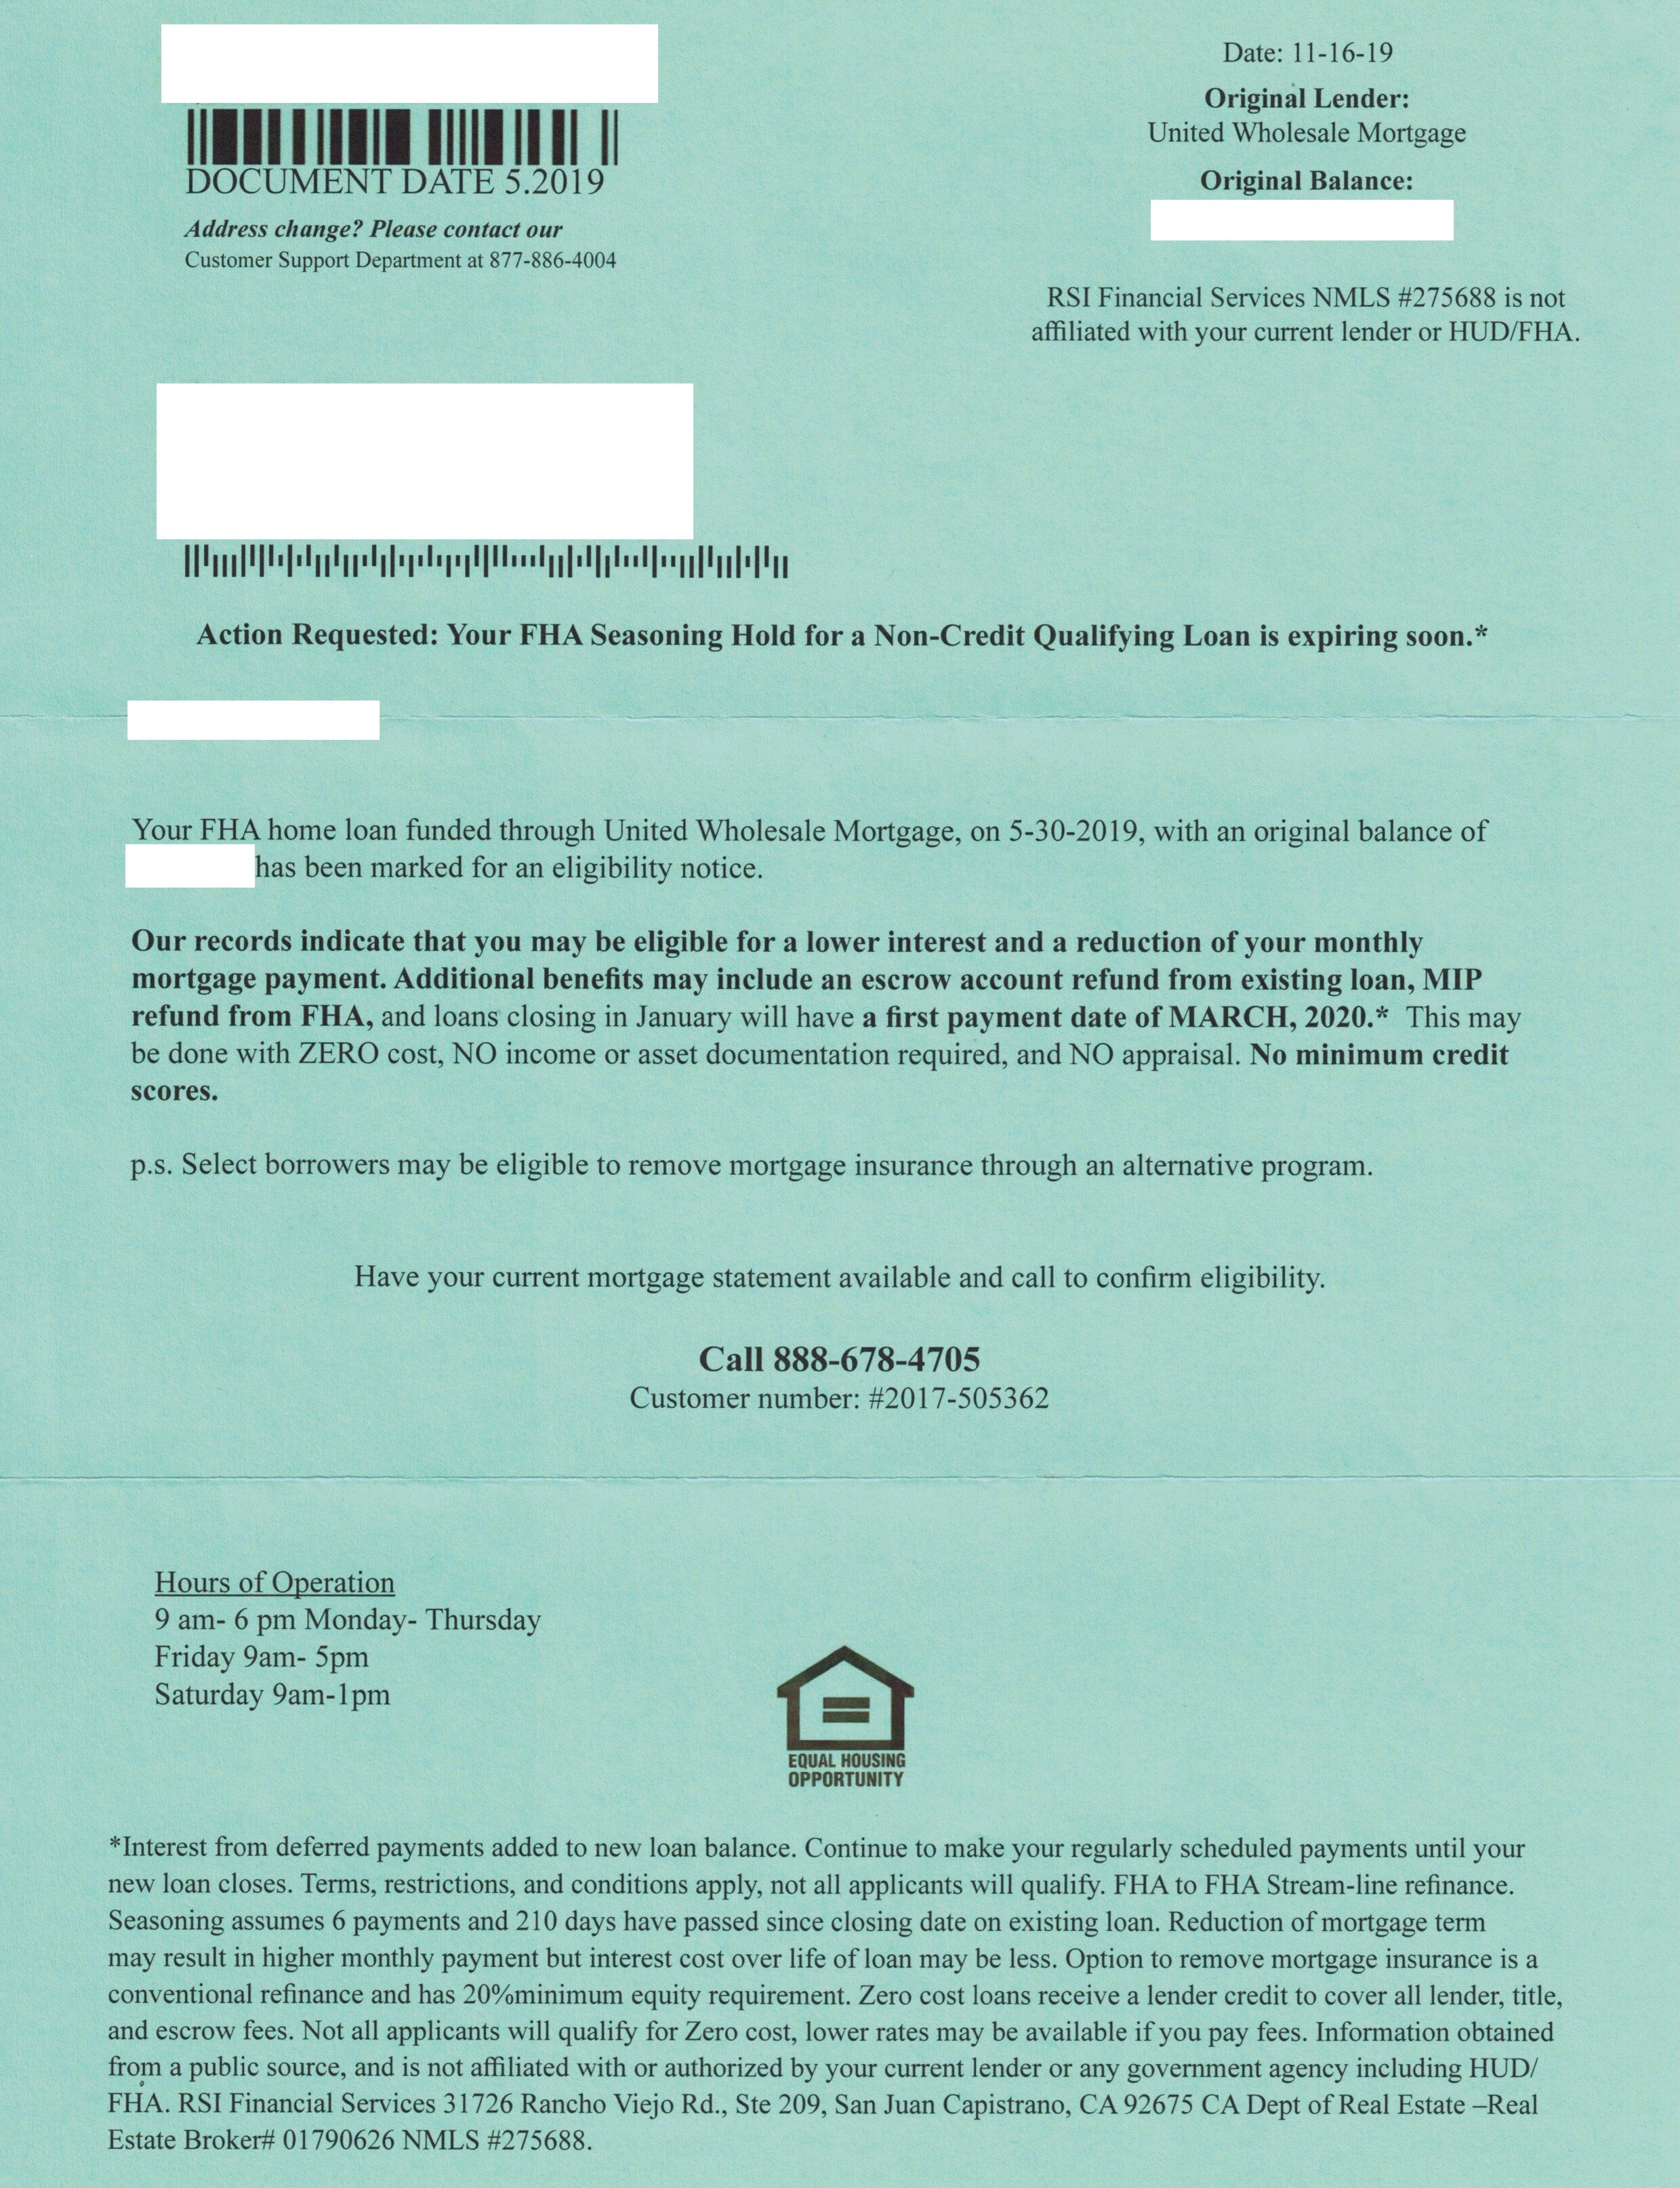 FHA Mailing Mortgage Brokers.jpg